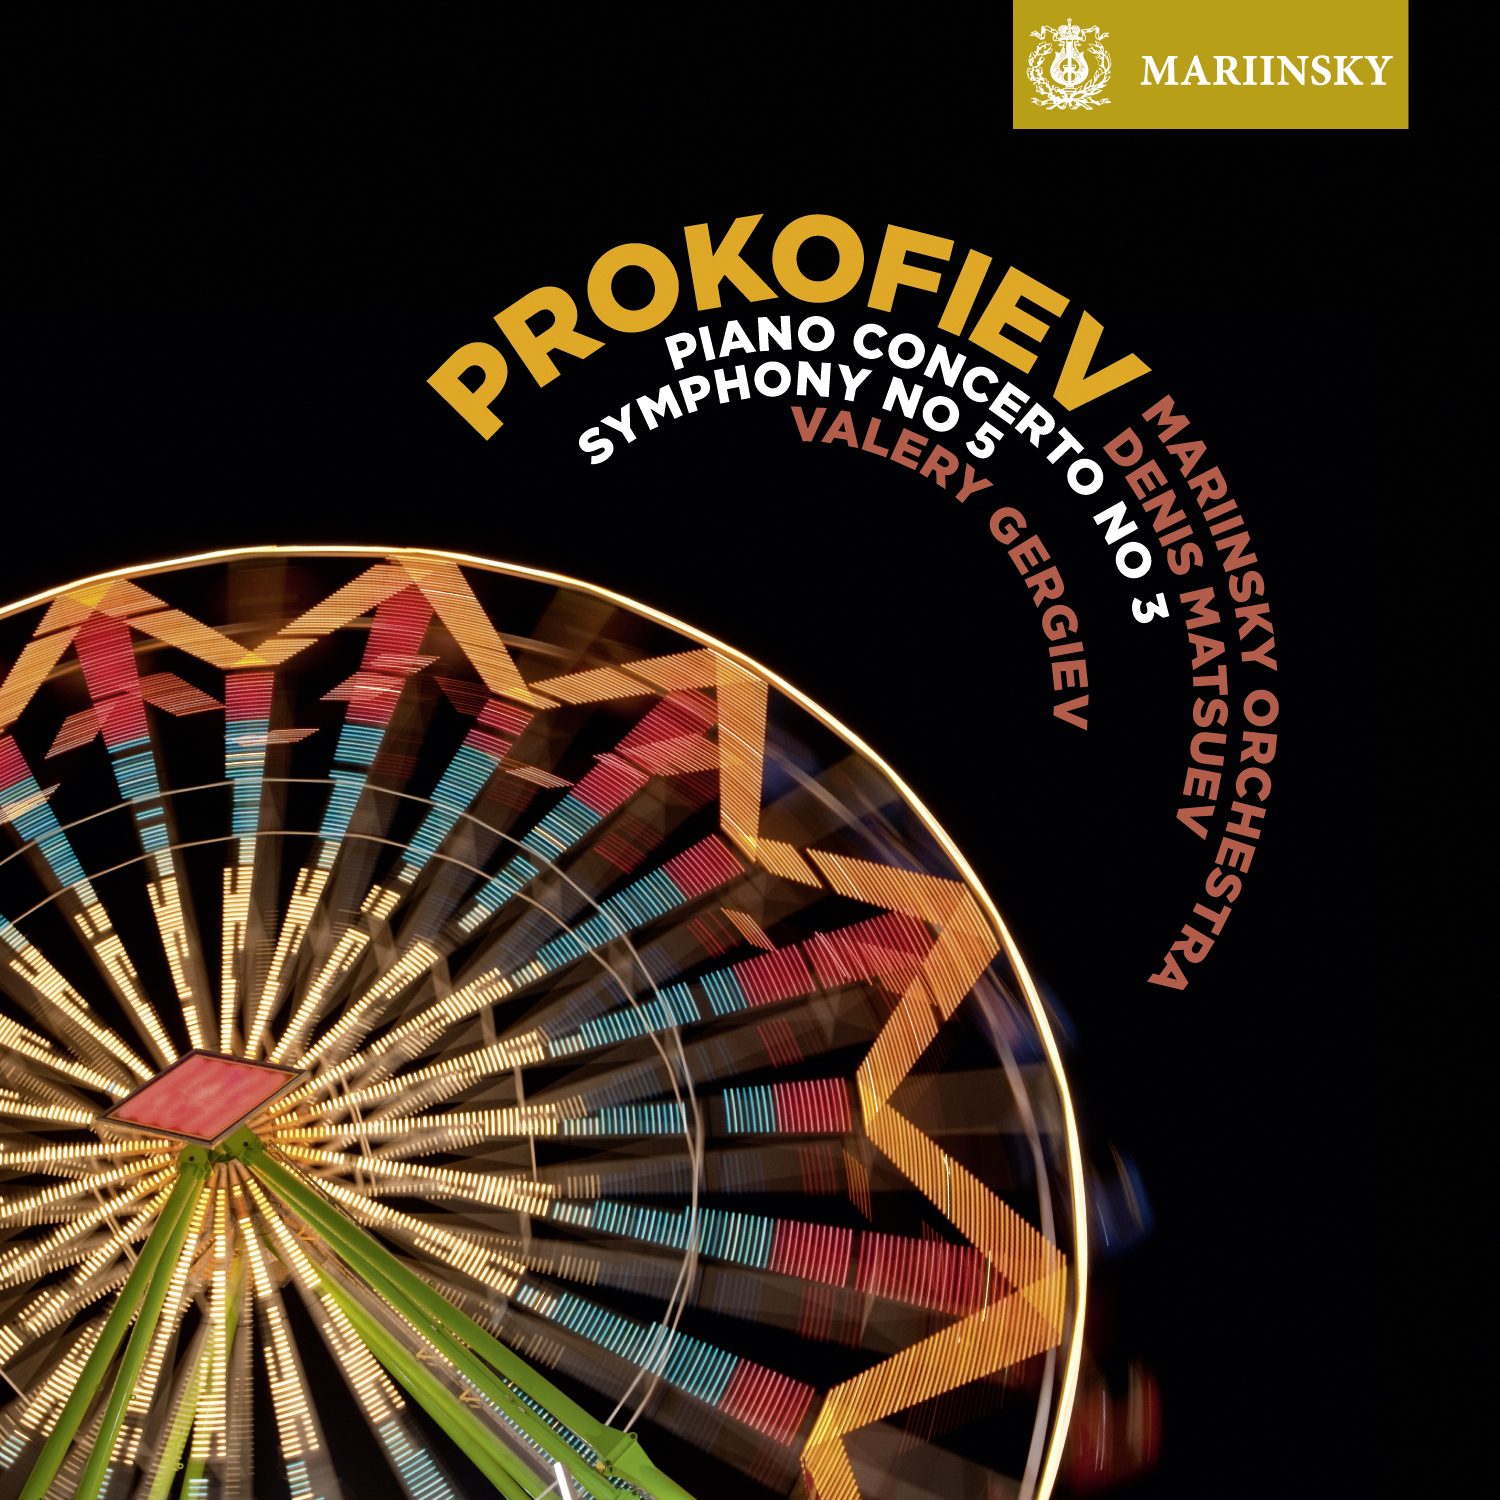 Denis Matsuev, Mariinsky Orchestra, Valery Gergiev – Prokofiev: Piano Concerto No 3 & Symphony No 5 (2014) MCH SACD ISO + DSF DSD64 + Hi-Res FLAC